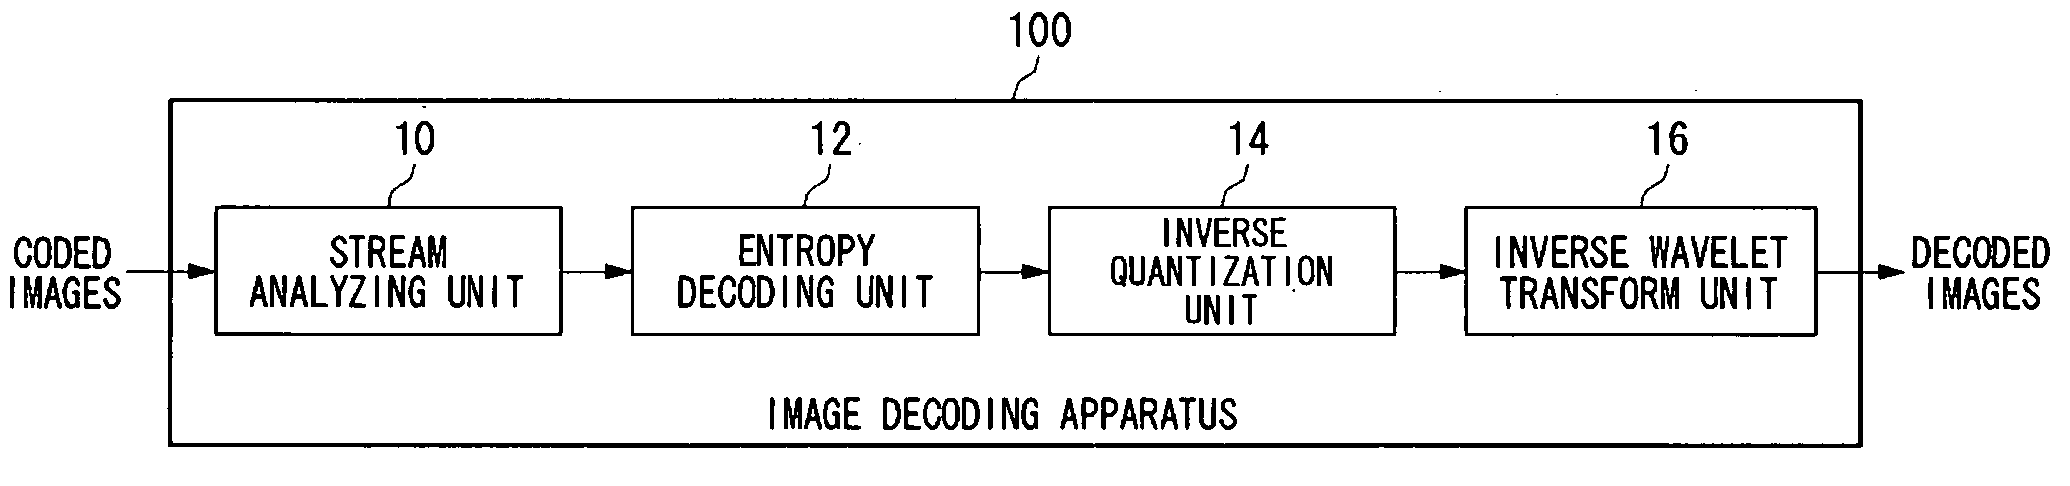 Image decoding apparatus